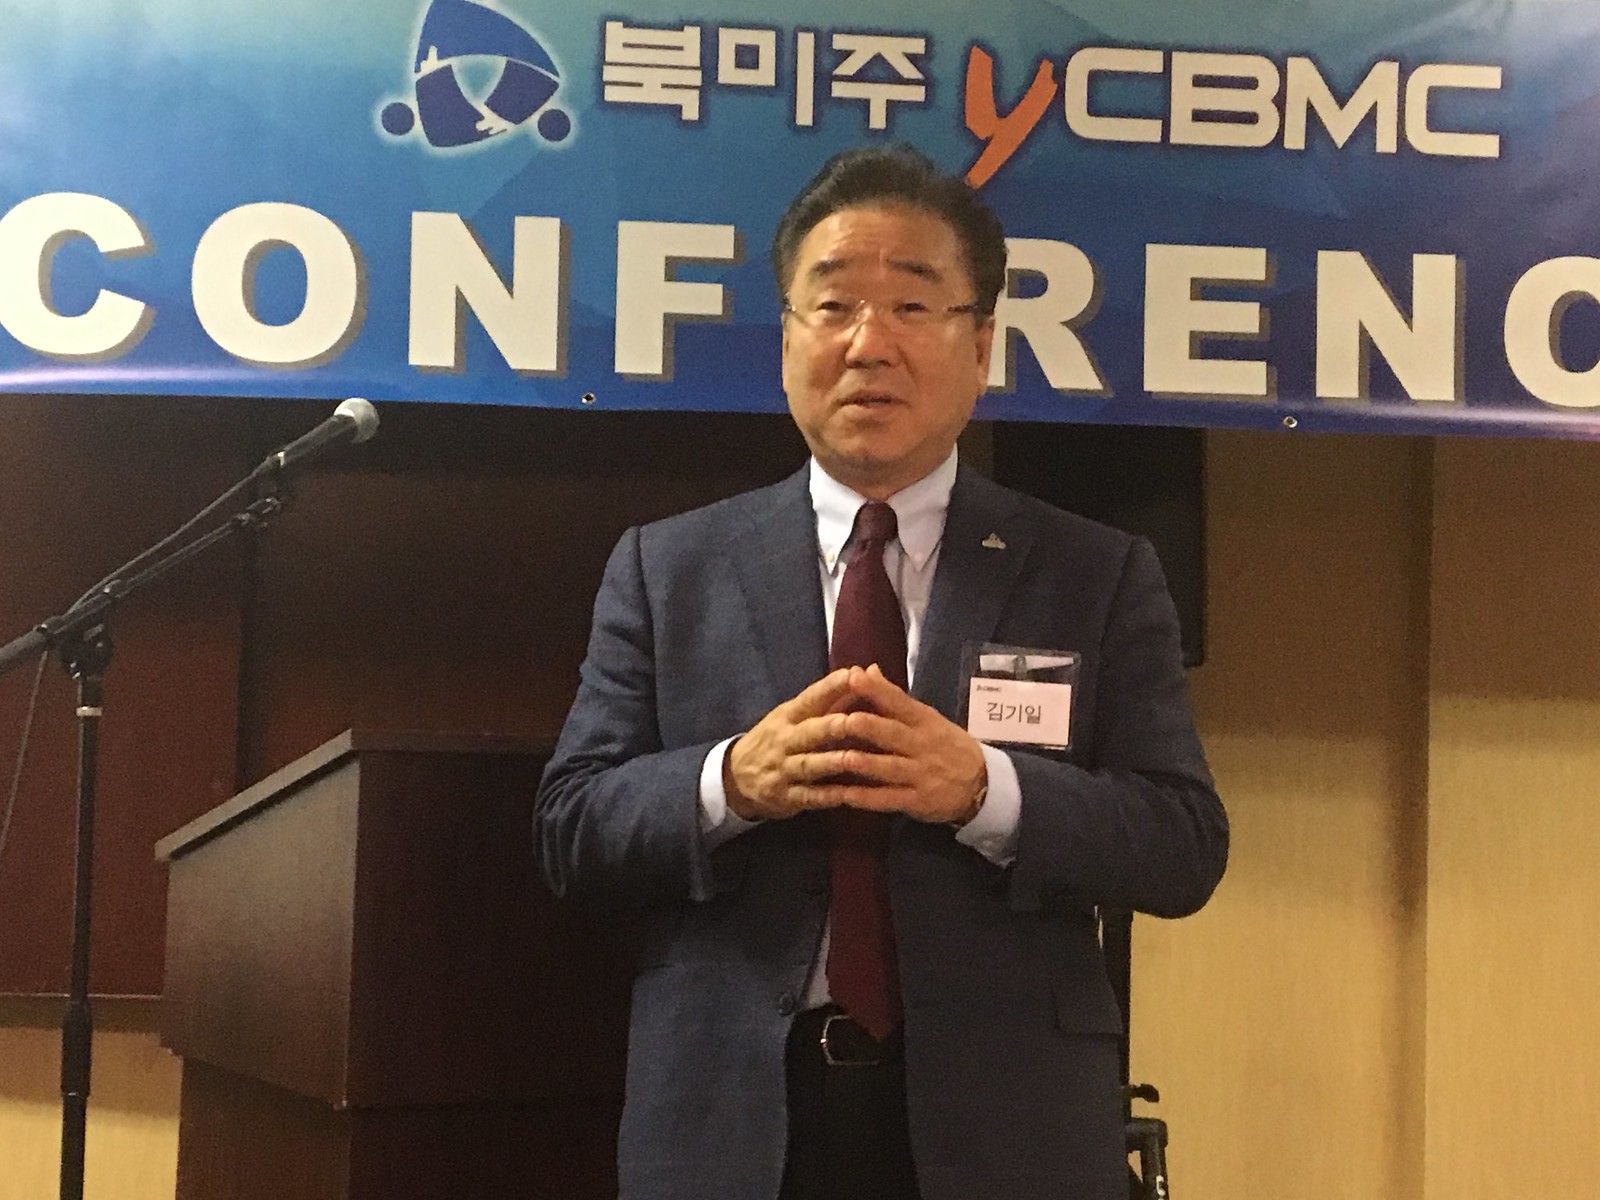 yCBMC Conference